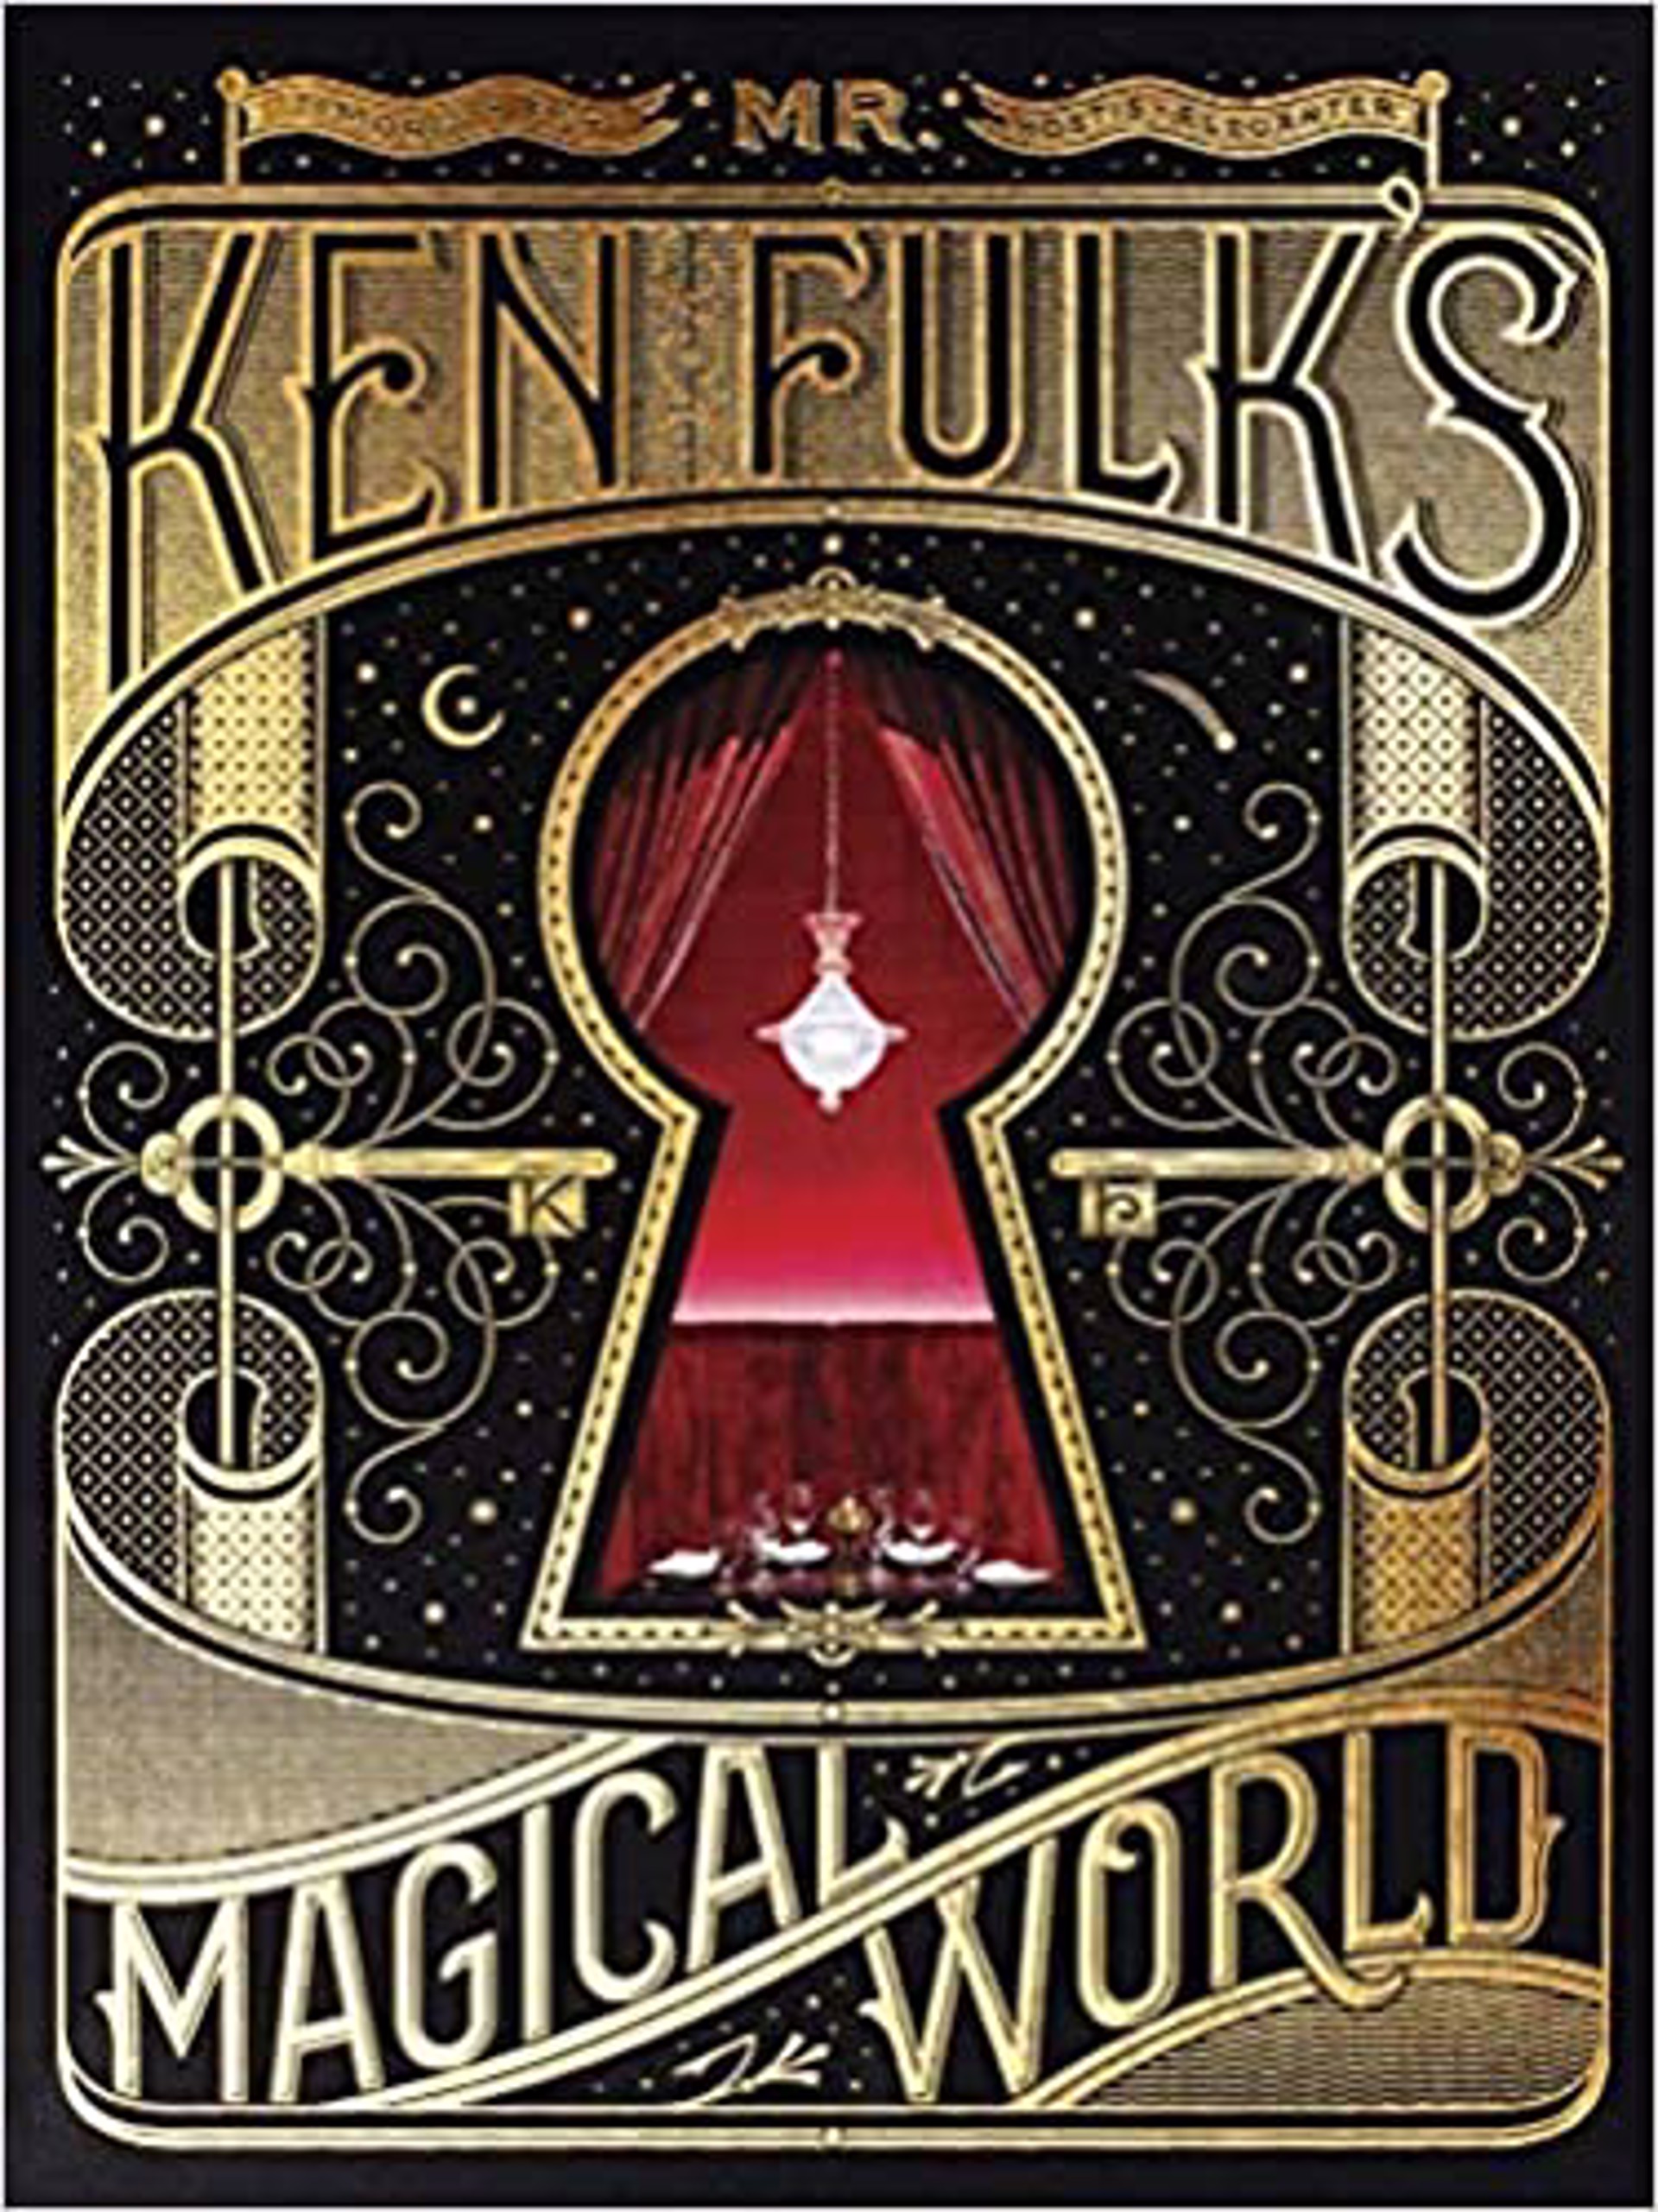 Mr. Ken Fulks Magical World